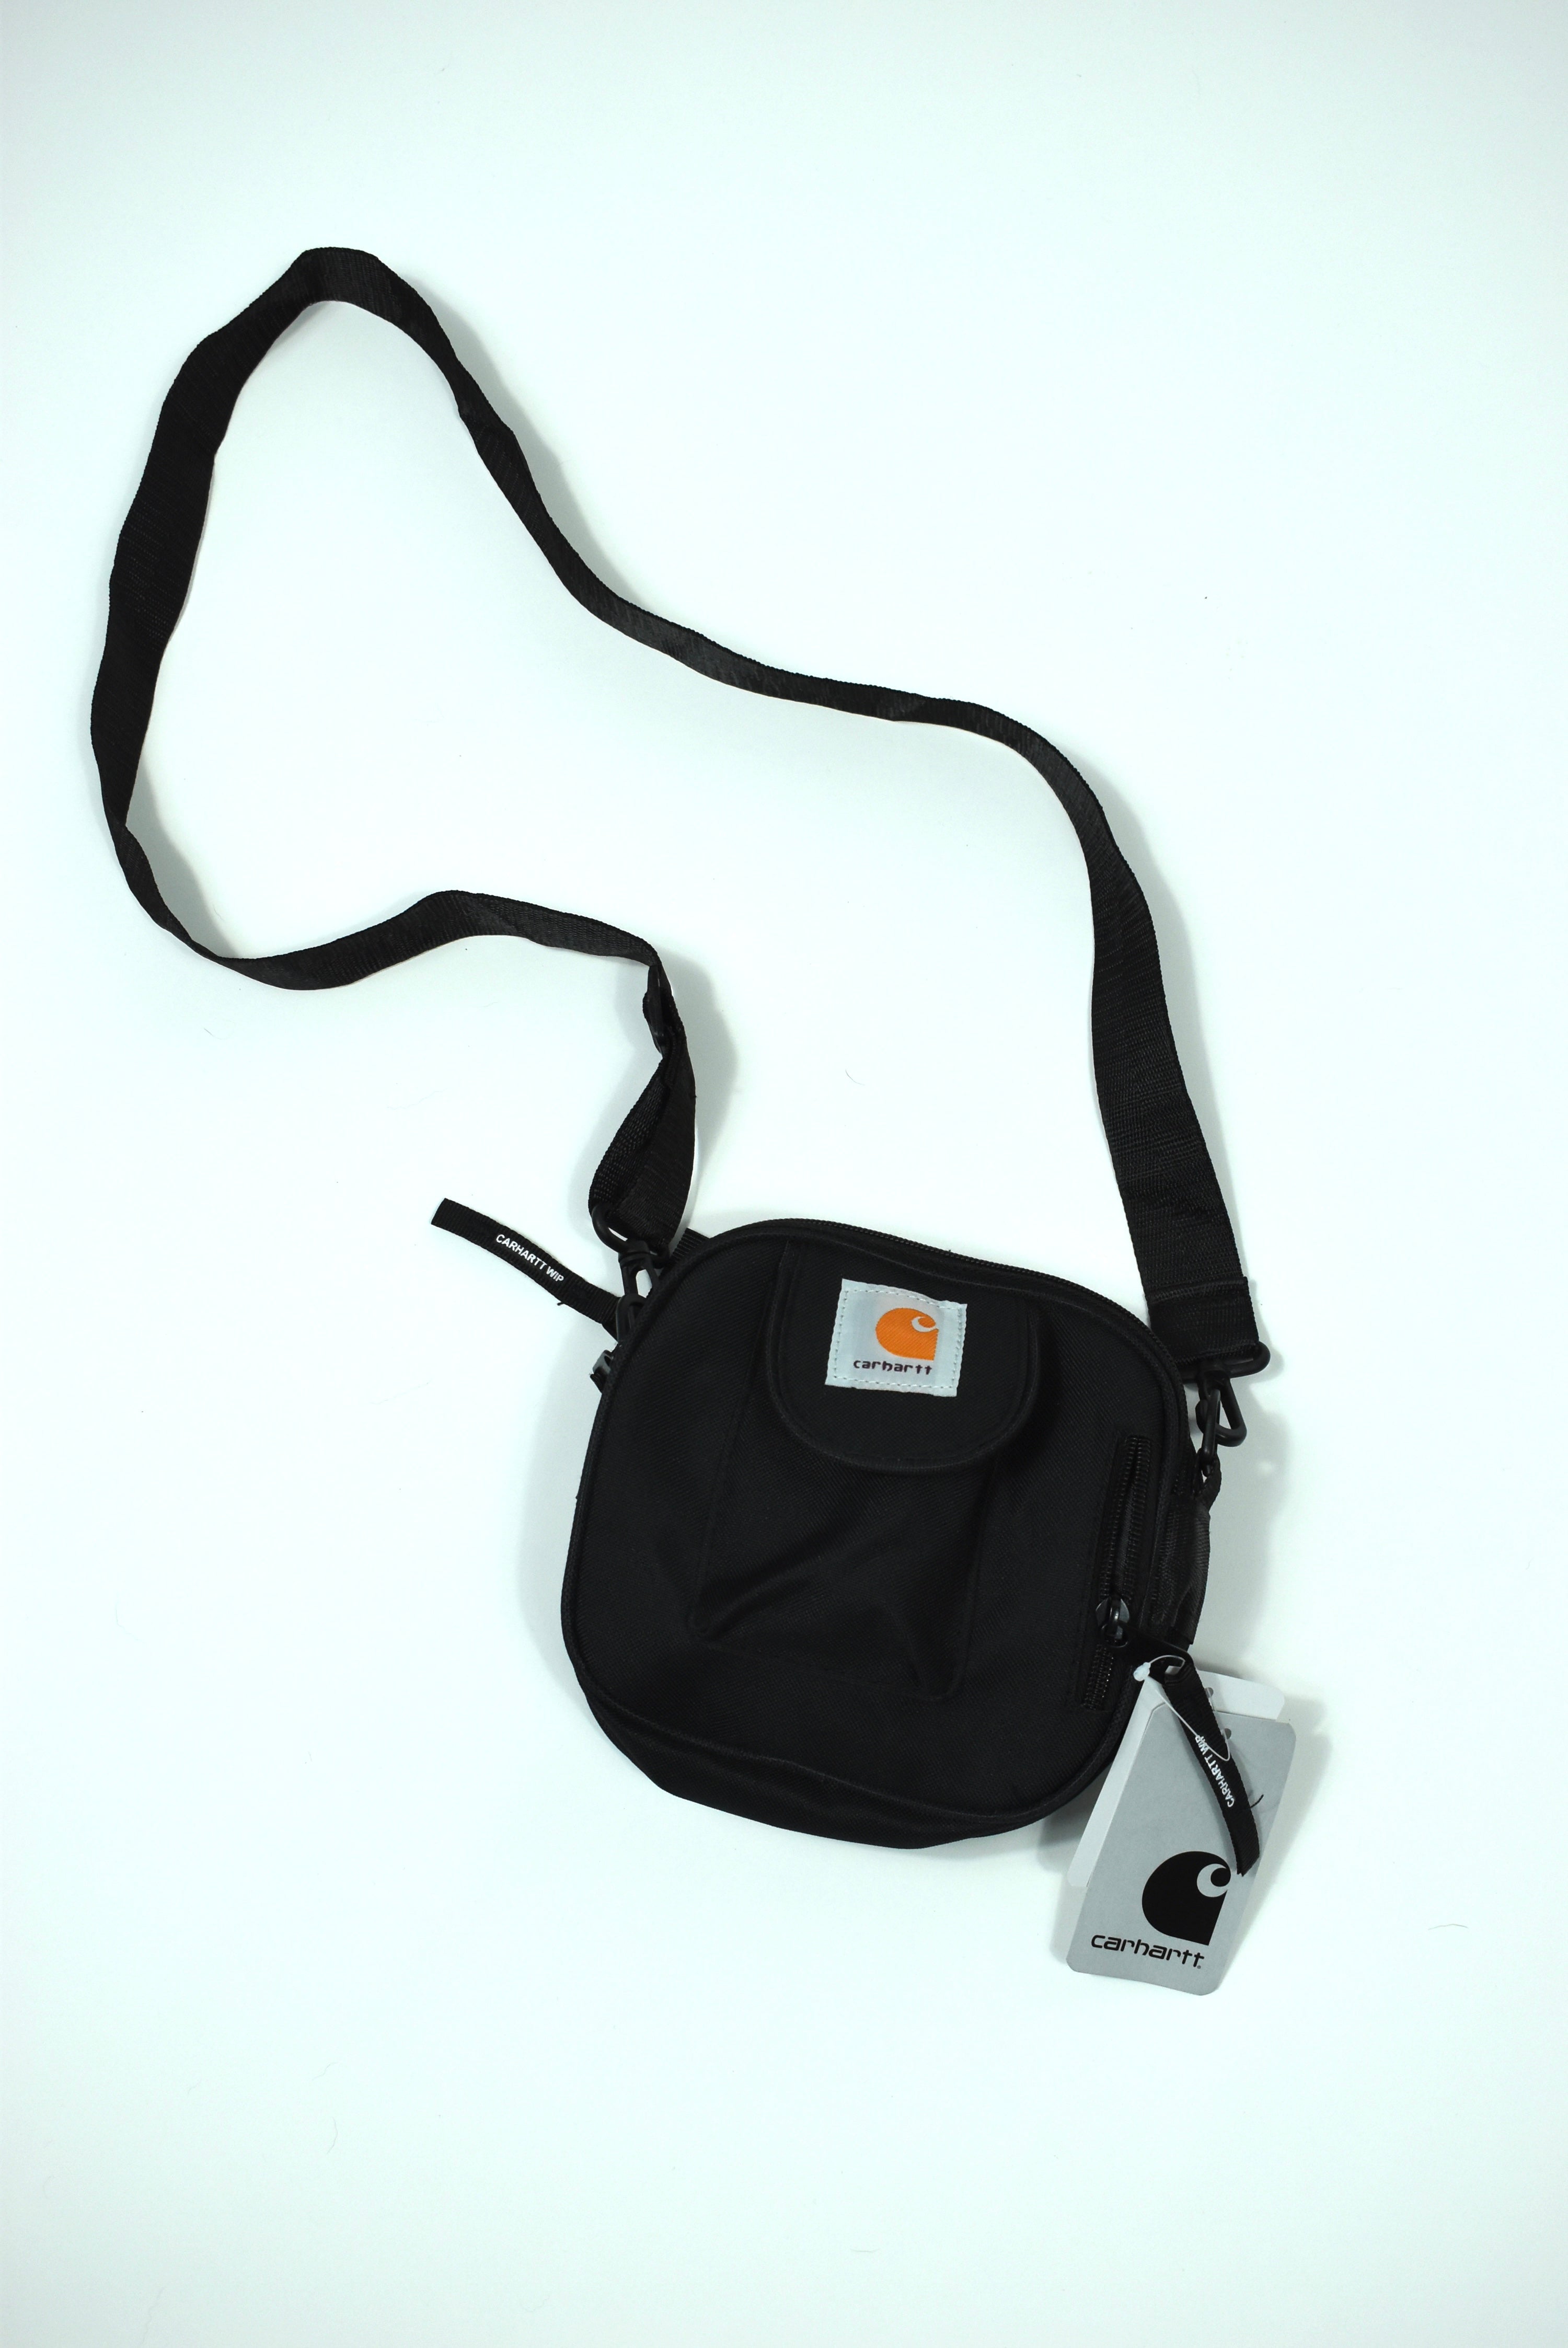 New Carhartt Shoulder Bag/Satchel OS